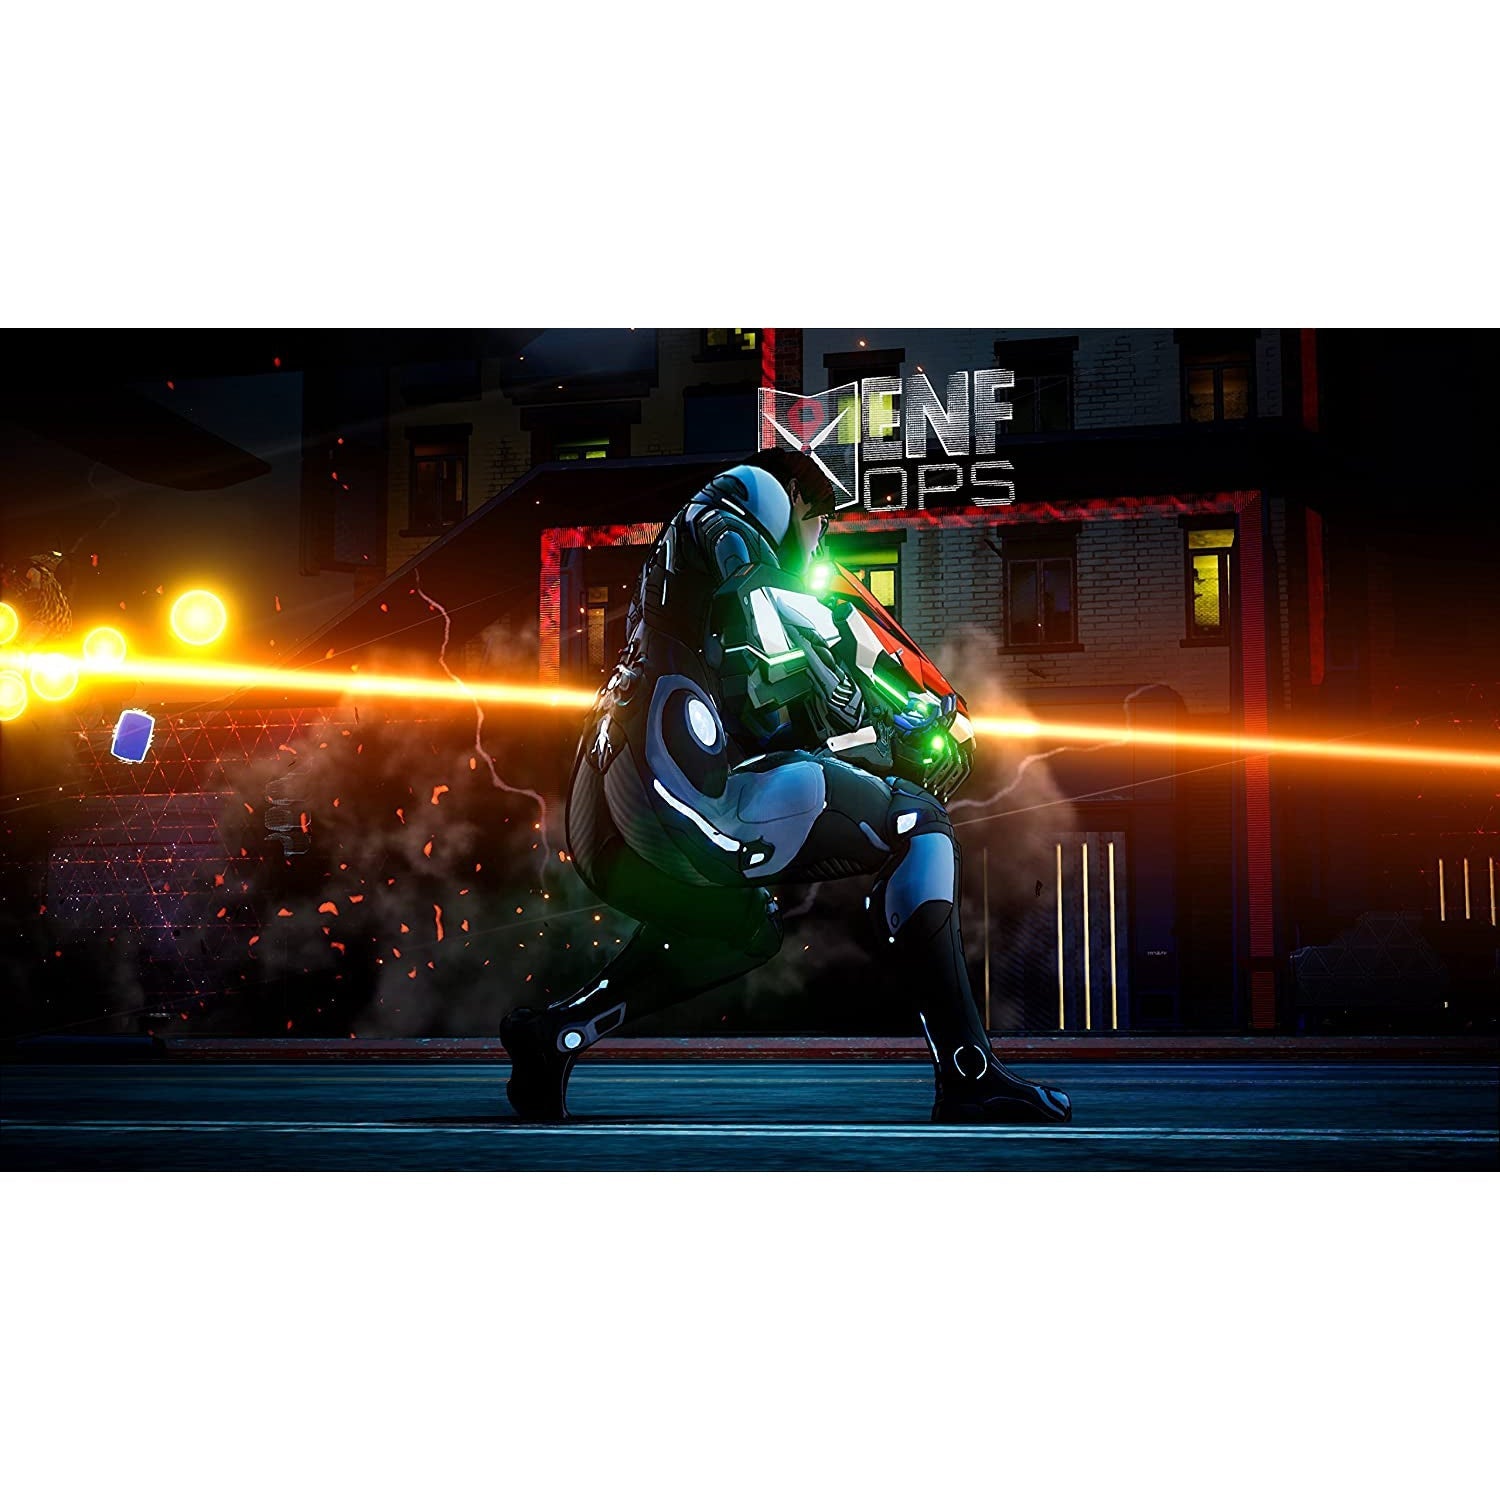 Crackdown 3 (Xbox One) - New